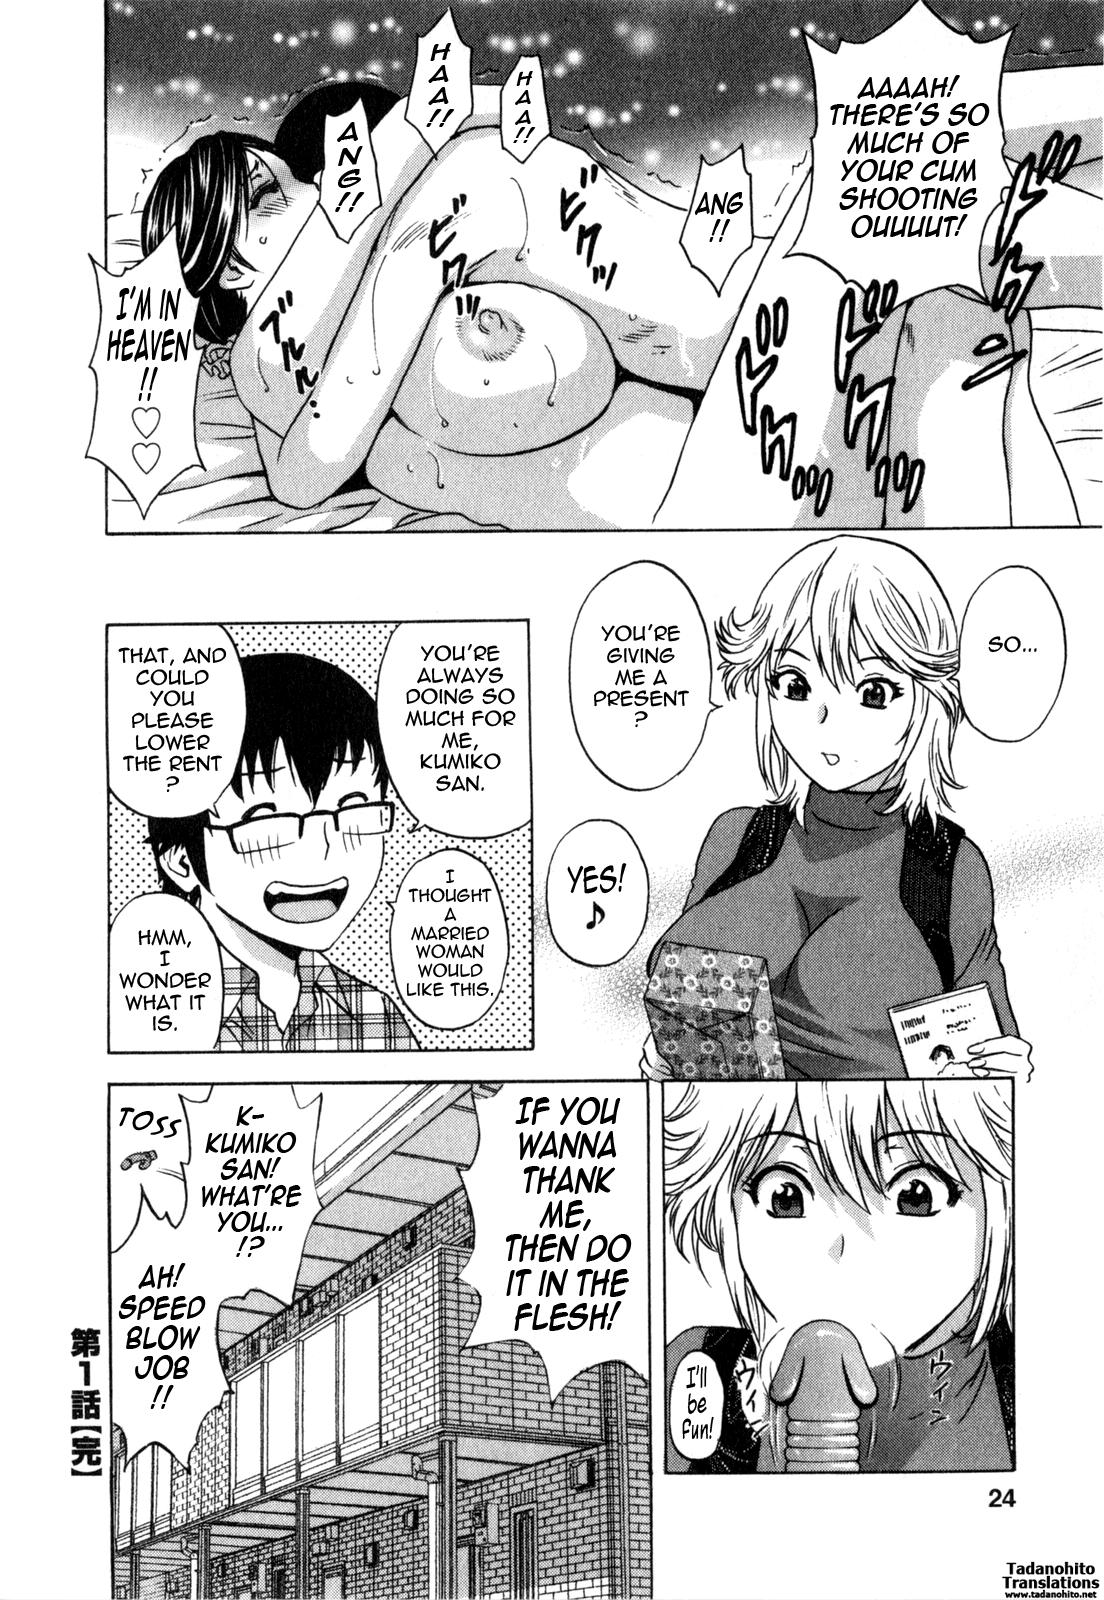 [Hidemaru] Life with Married Women Just Like a Manga 3 - Ch. 1-2 [English] {Tadanohito} 25